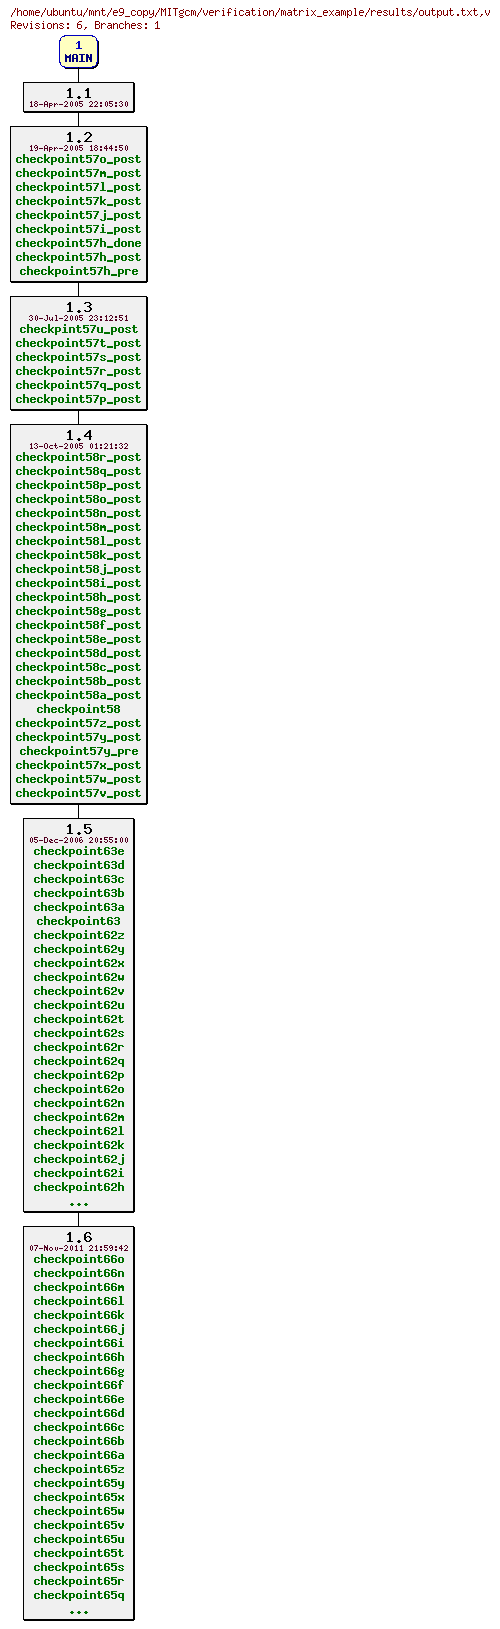 Revisions of MITgcm/verification/matrix_example/results/output.txt